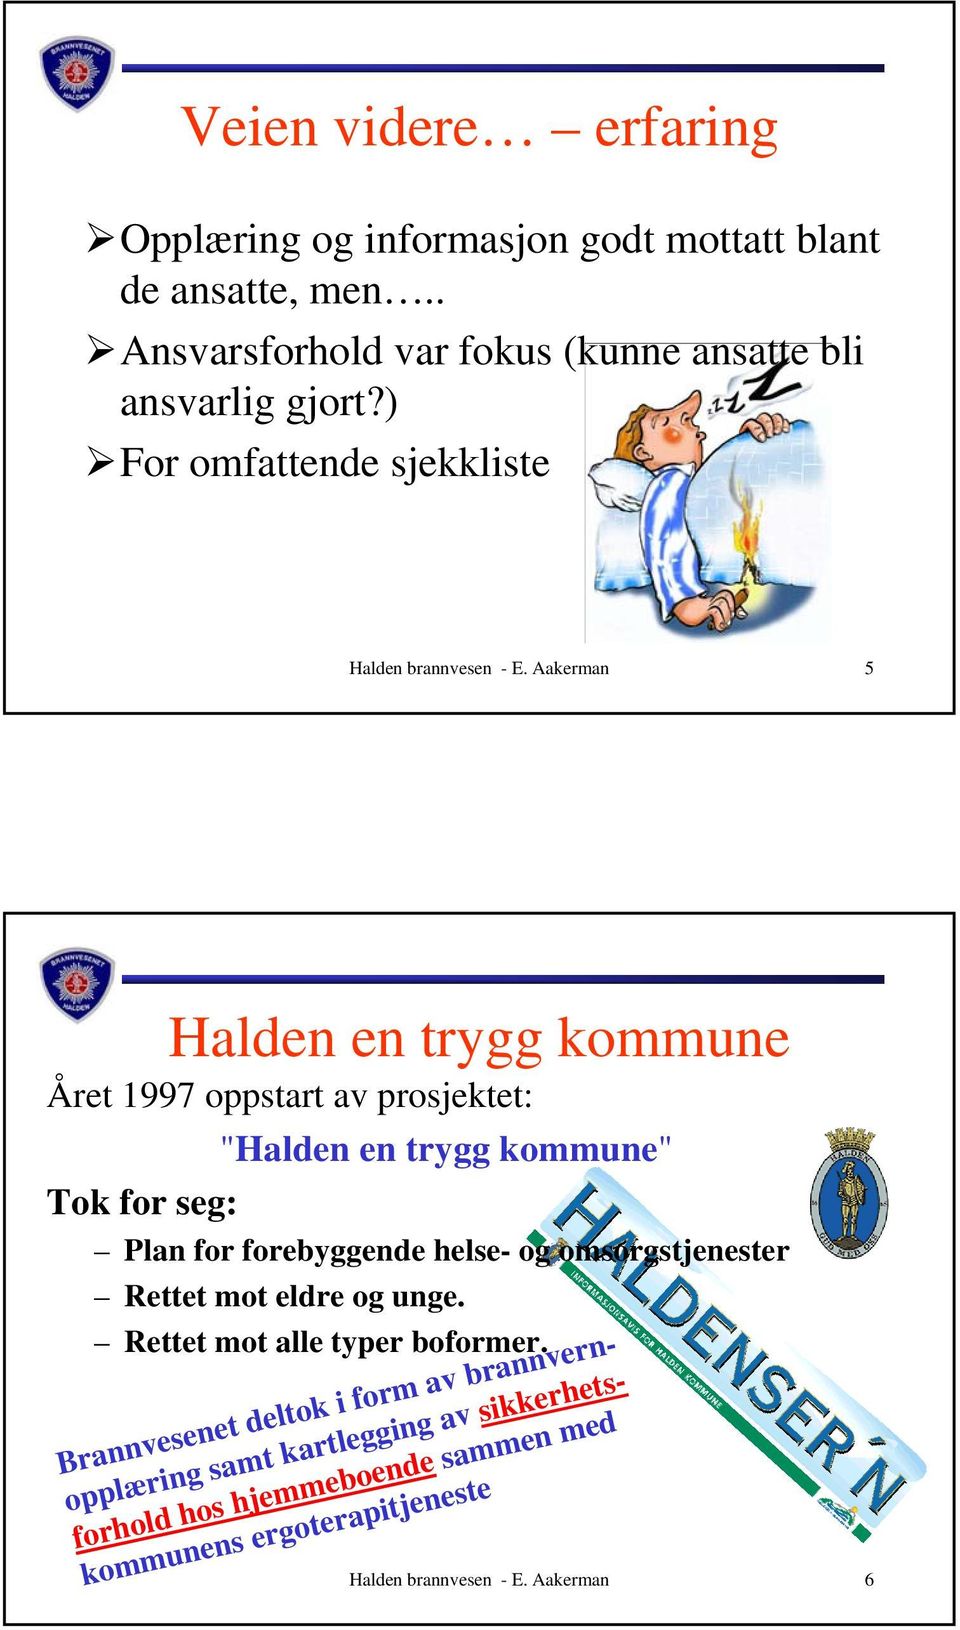 Aakerman 5 Halden en trygg kommune Året 1997 oppstart av prosjektet: "Halden en trygg kommune" Tok for seg: Plan for forebyggende helse- og